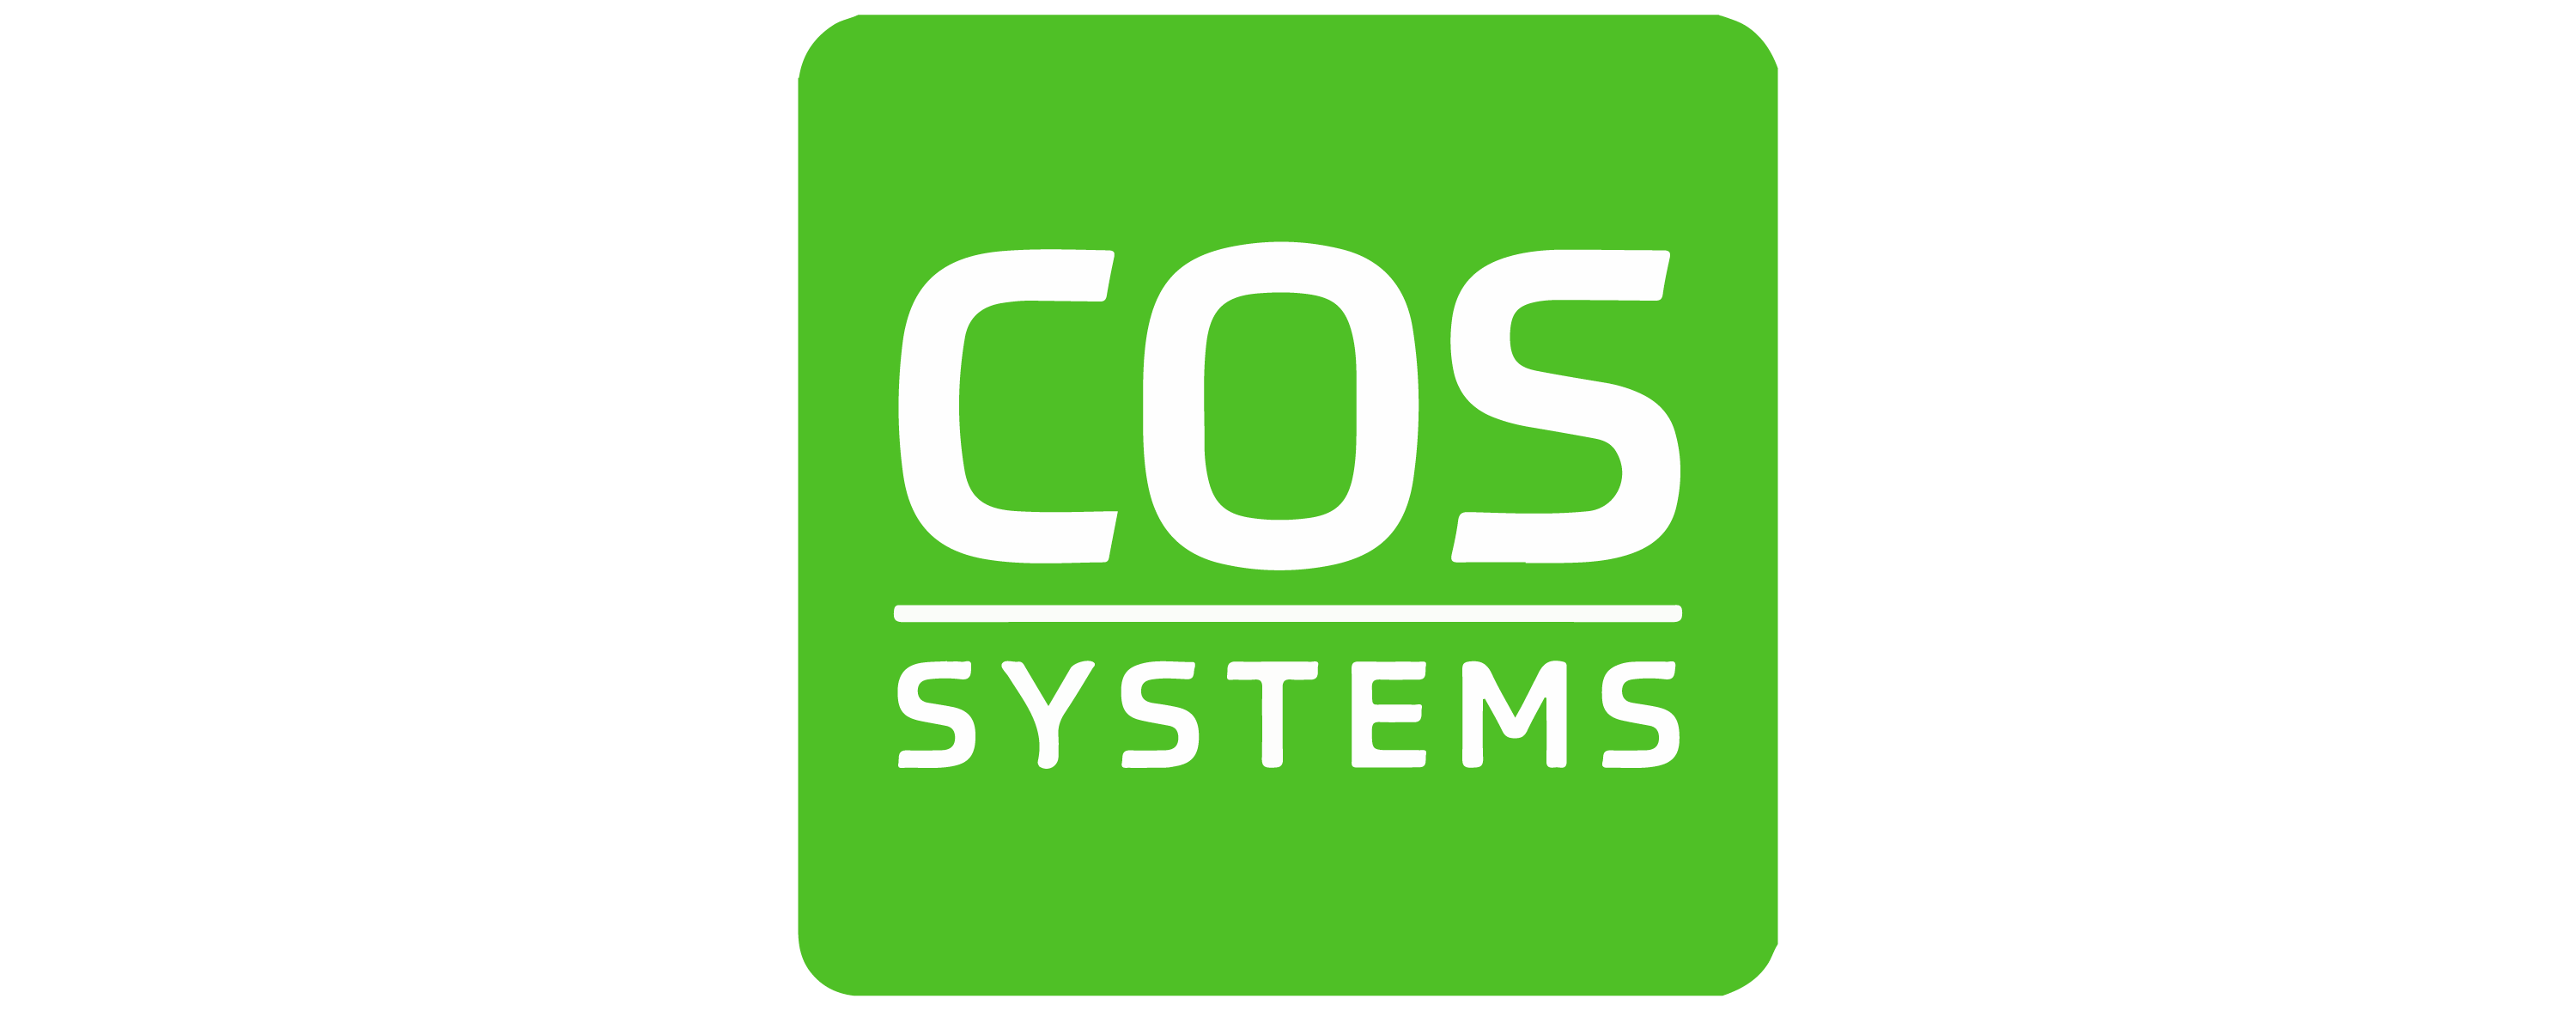 Cos-Systems_logo-01